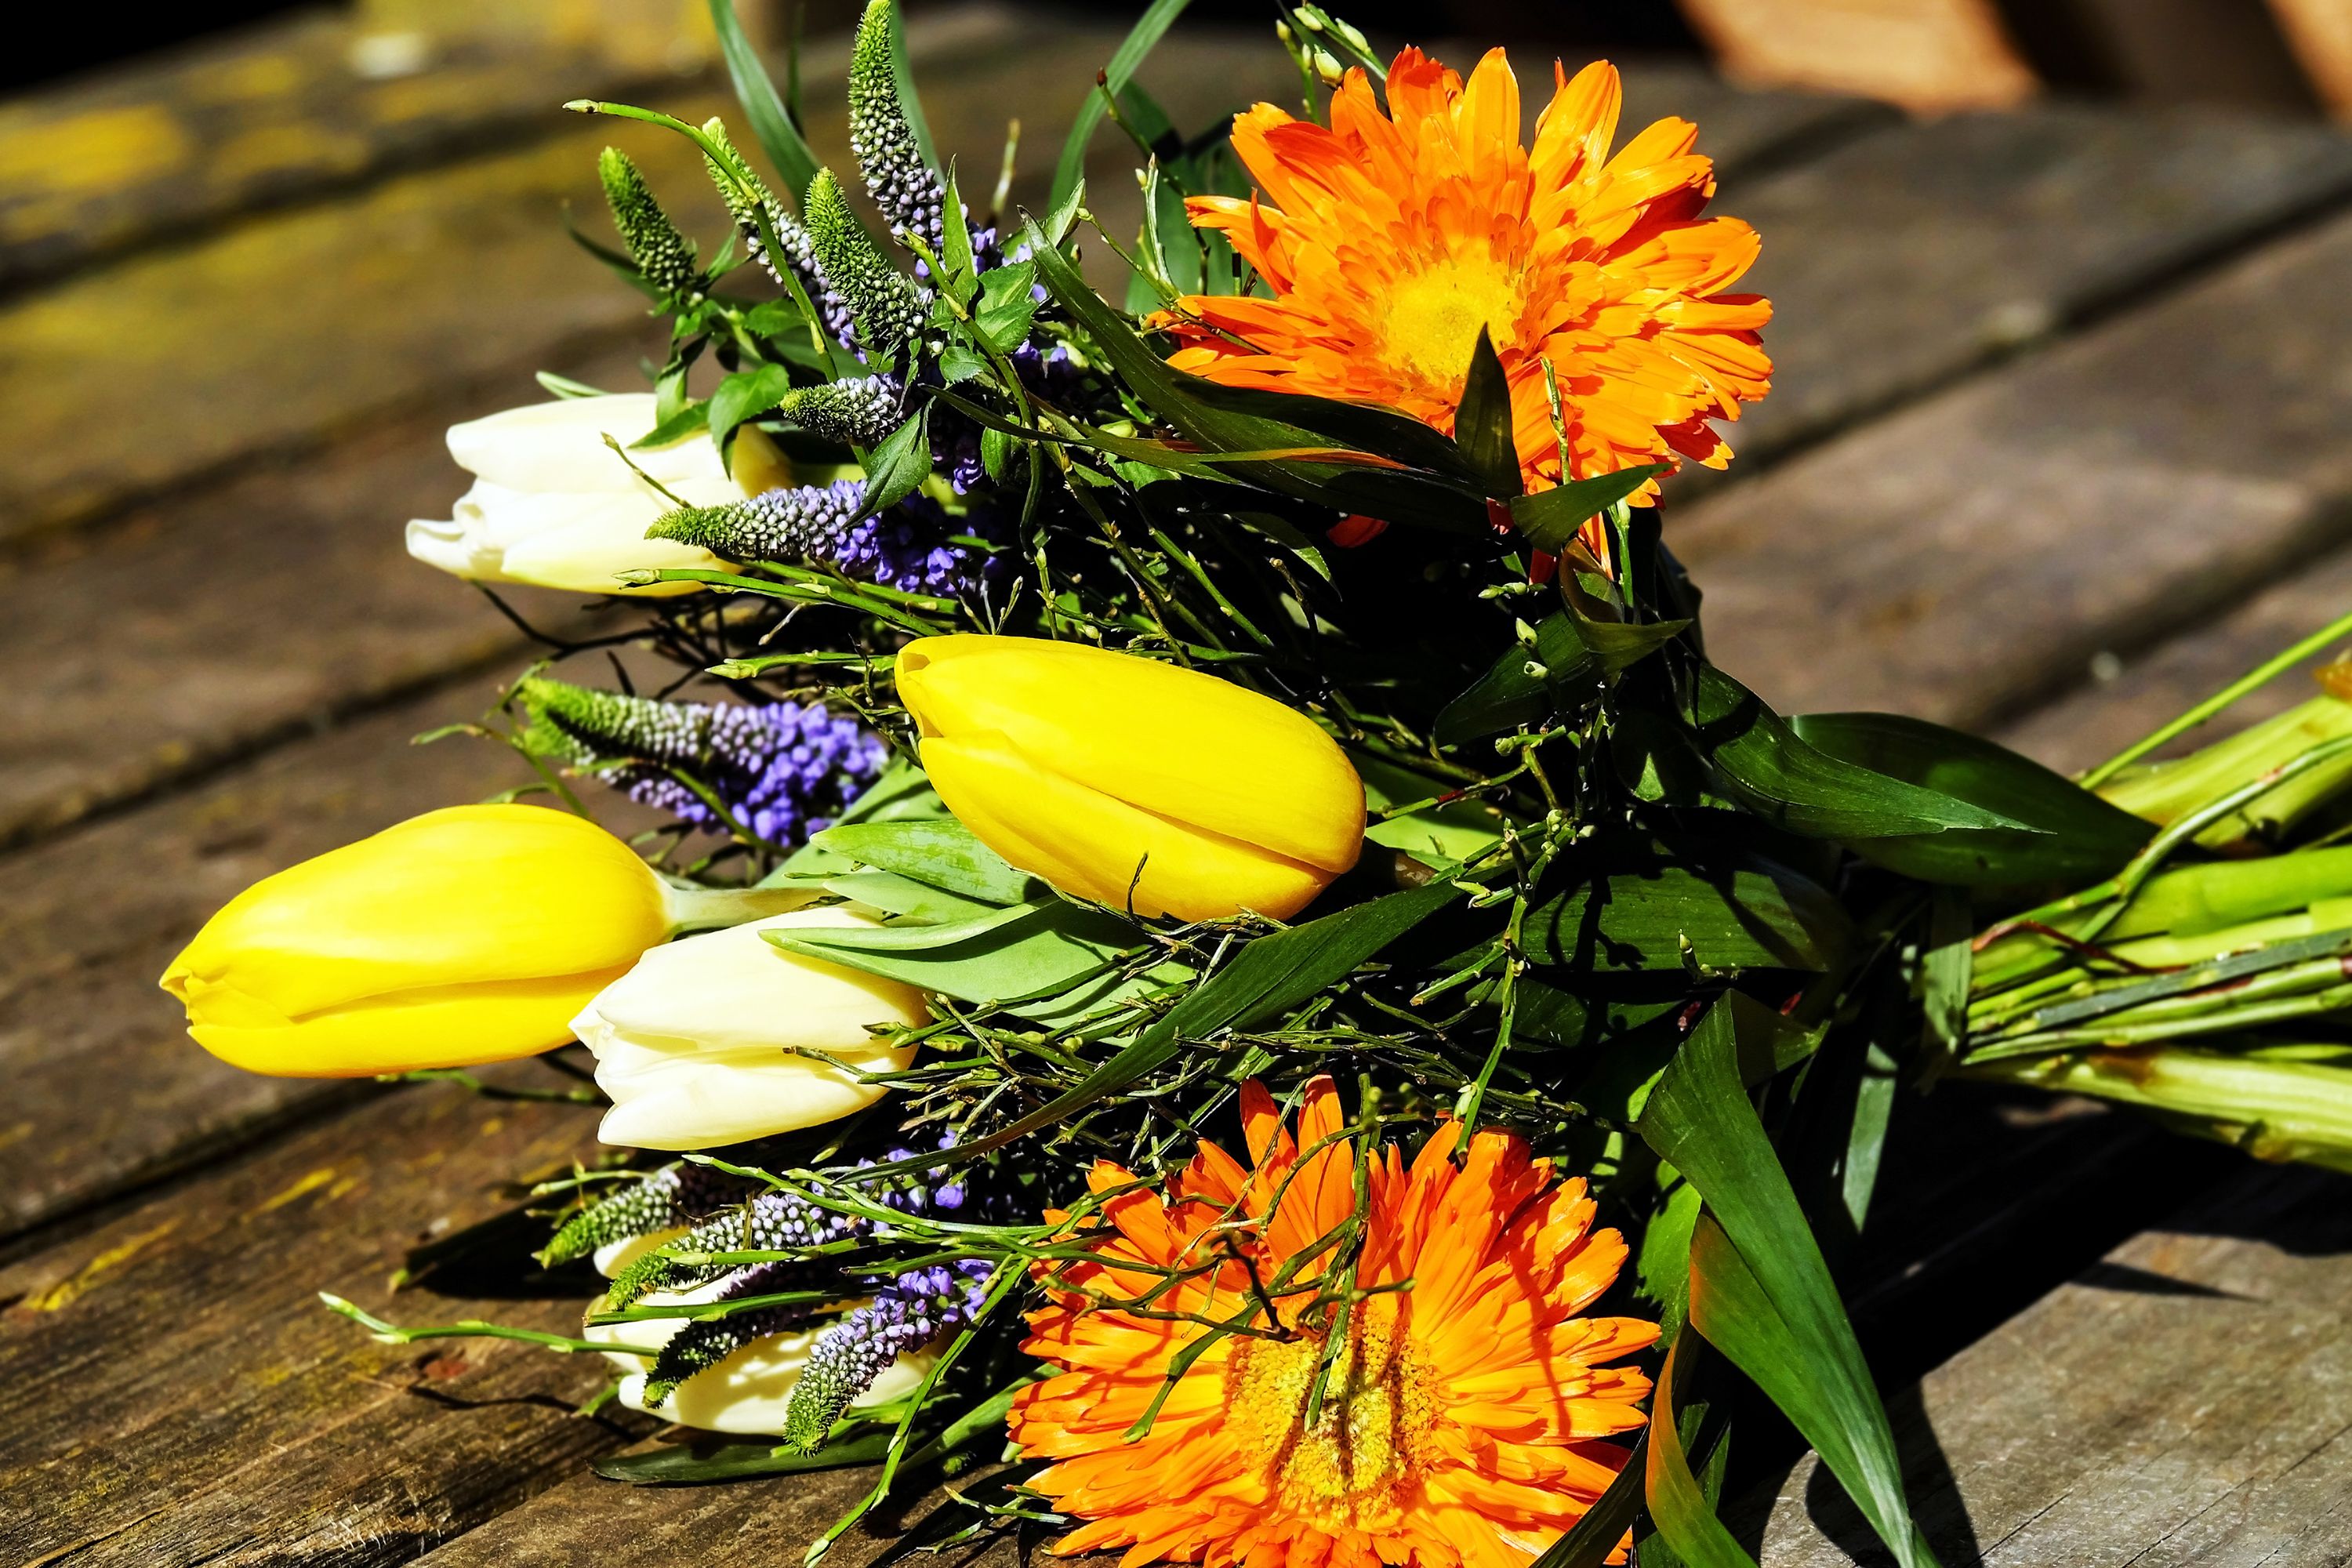 Pin by Flowers, Naturally! on Random Flowers | Pinterest | Flower ...